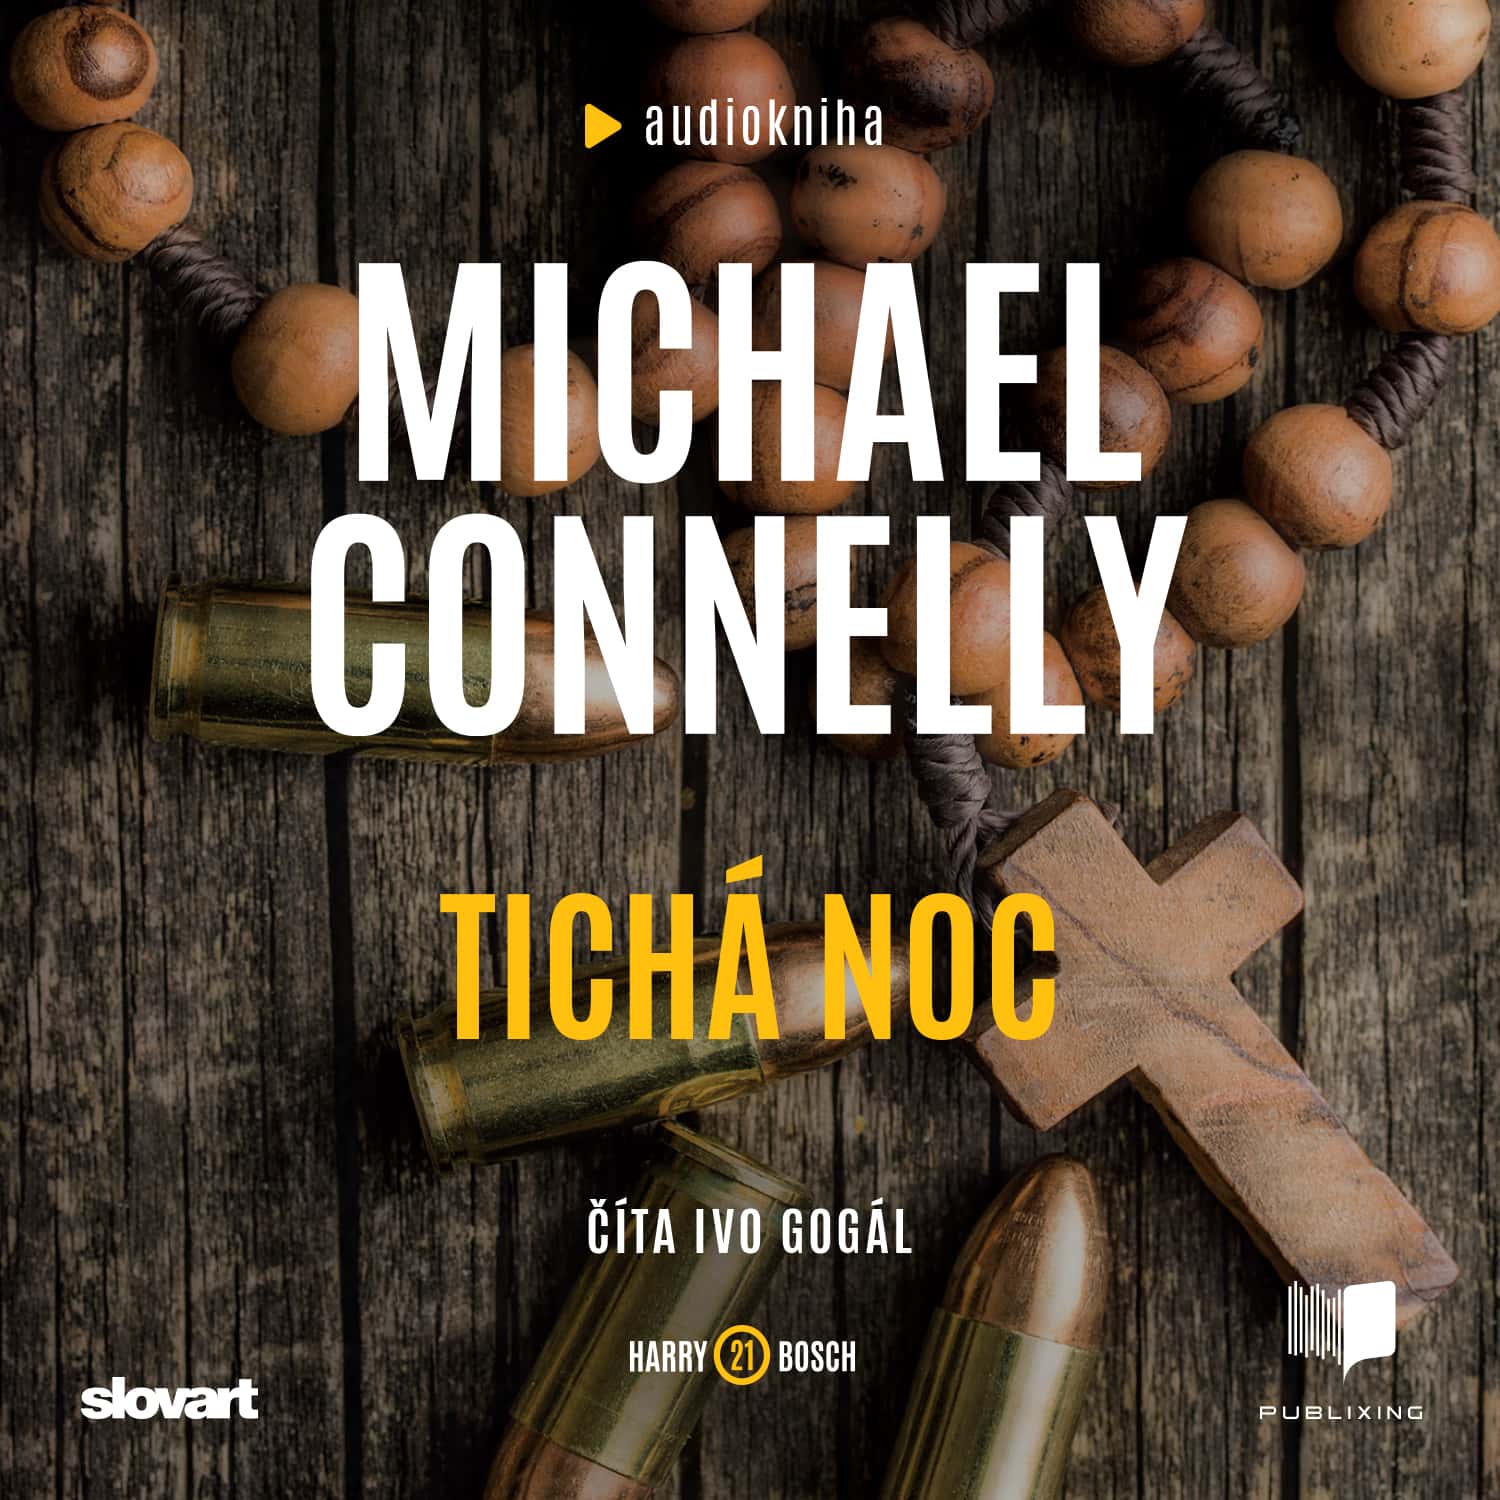 Michael Connely - Ticha noc - Audiokniha